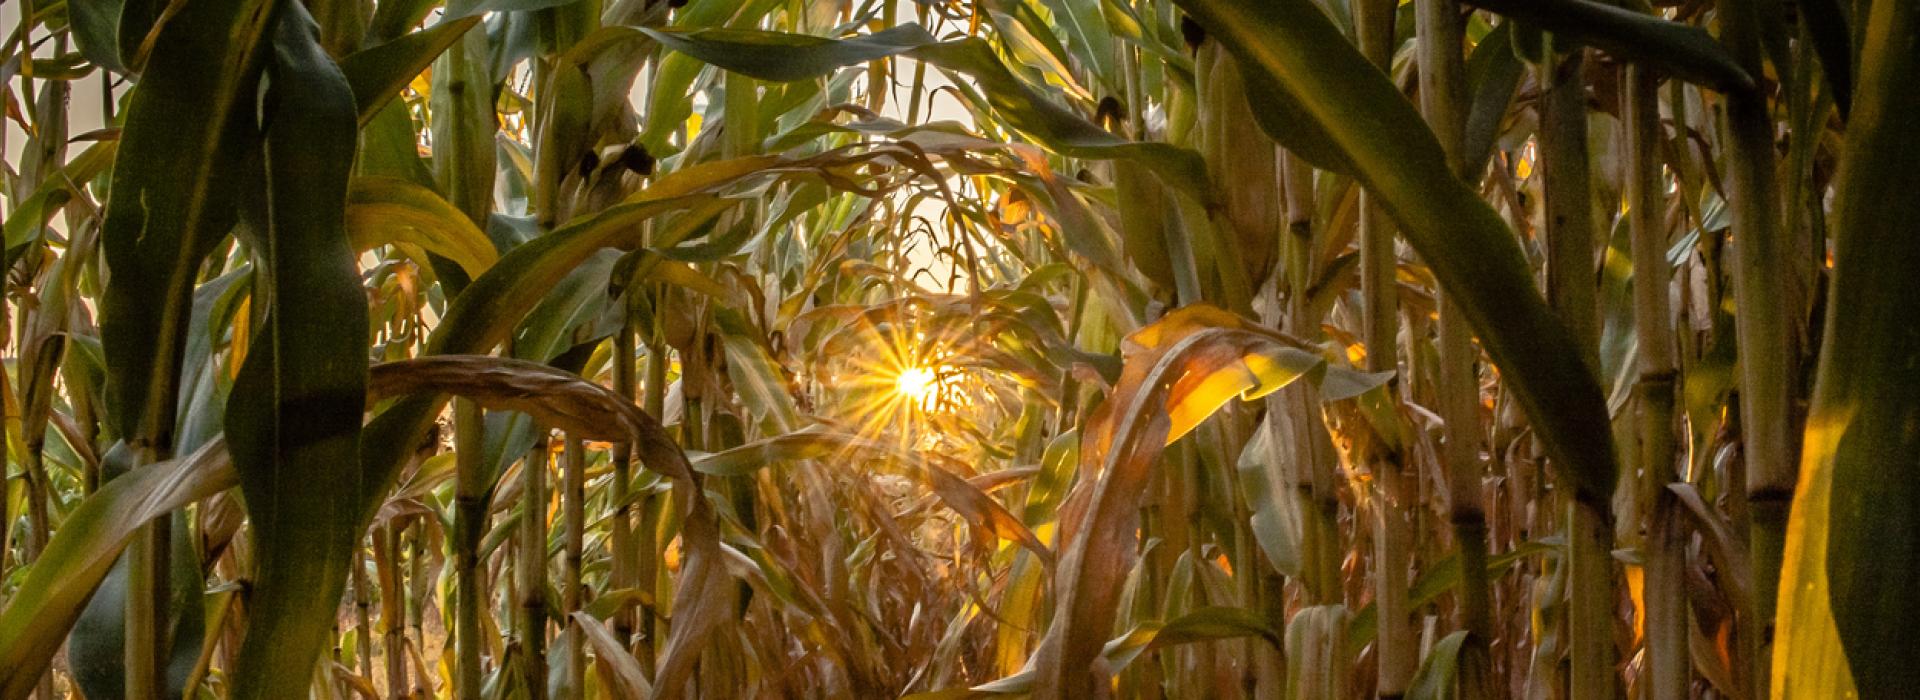 Sun shining a starburst pattern in rows of dried corn